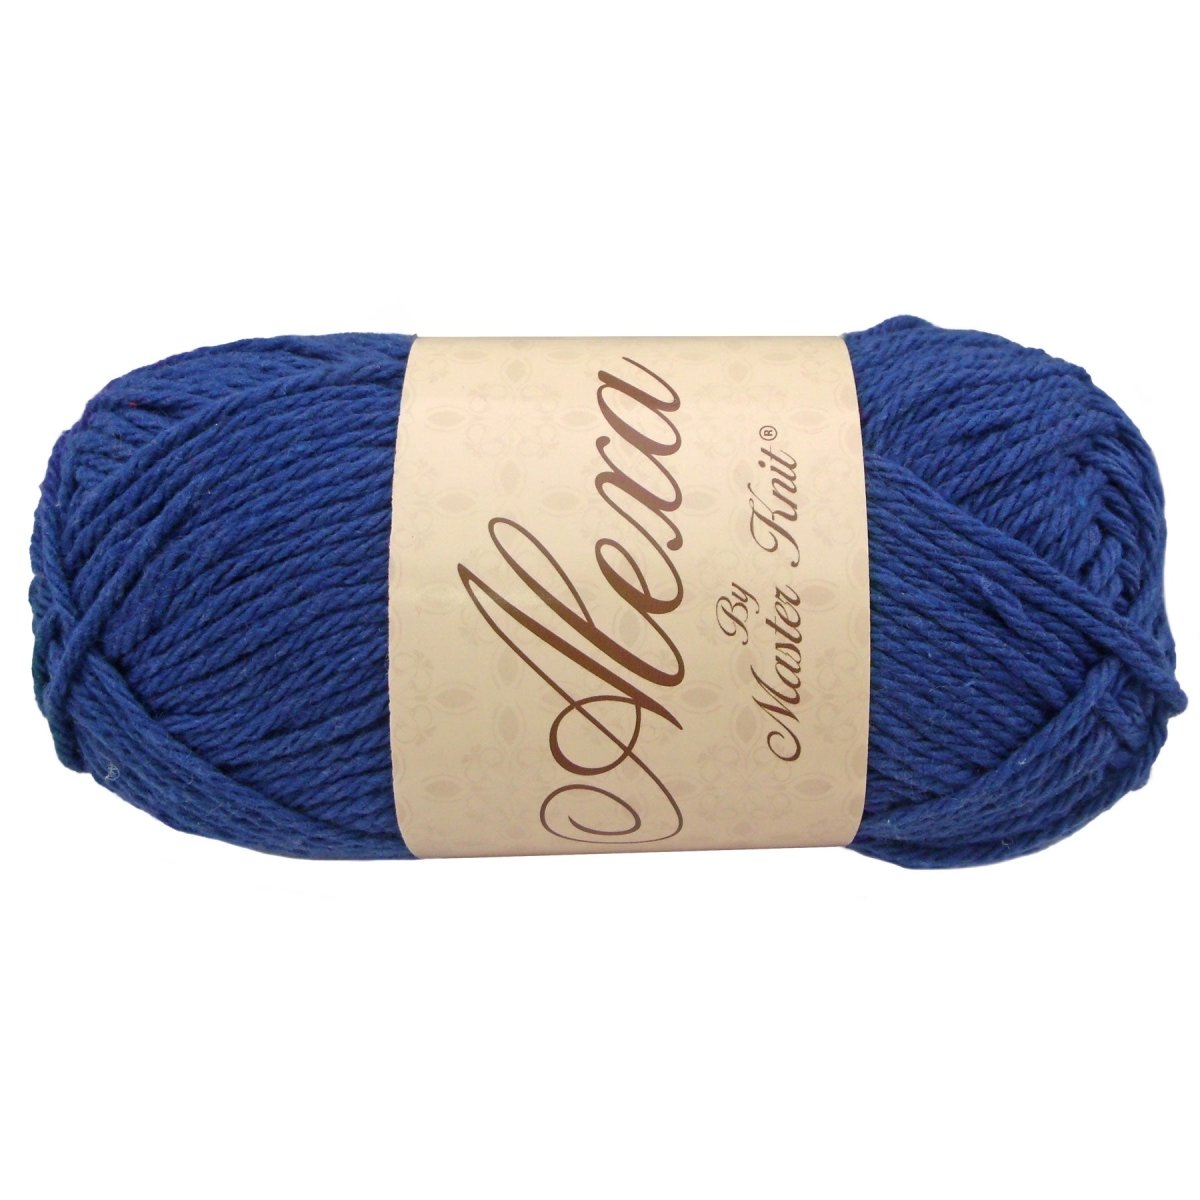 ALEXA - Crochetstores9340-655